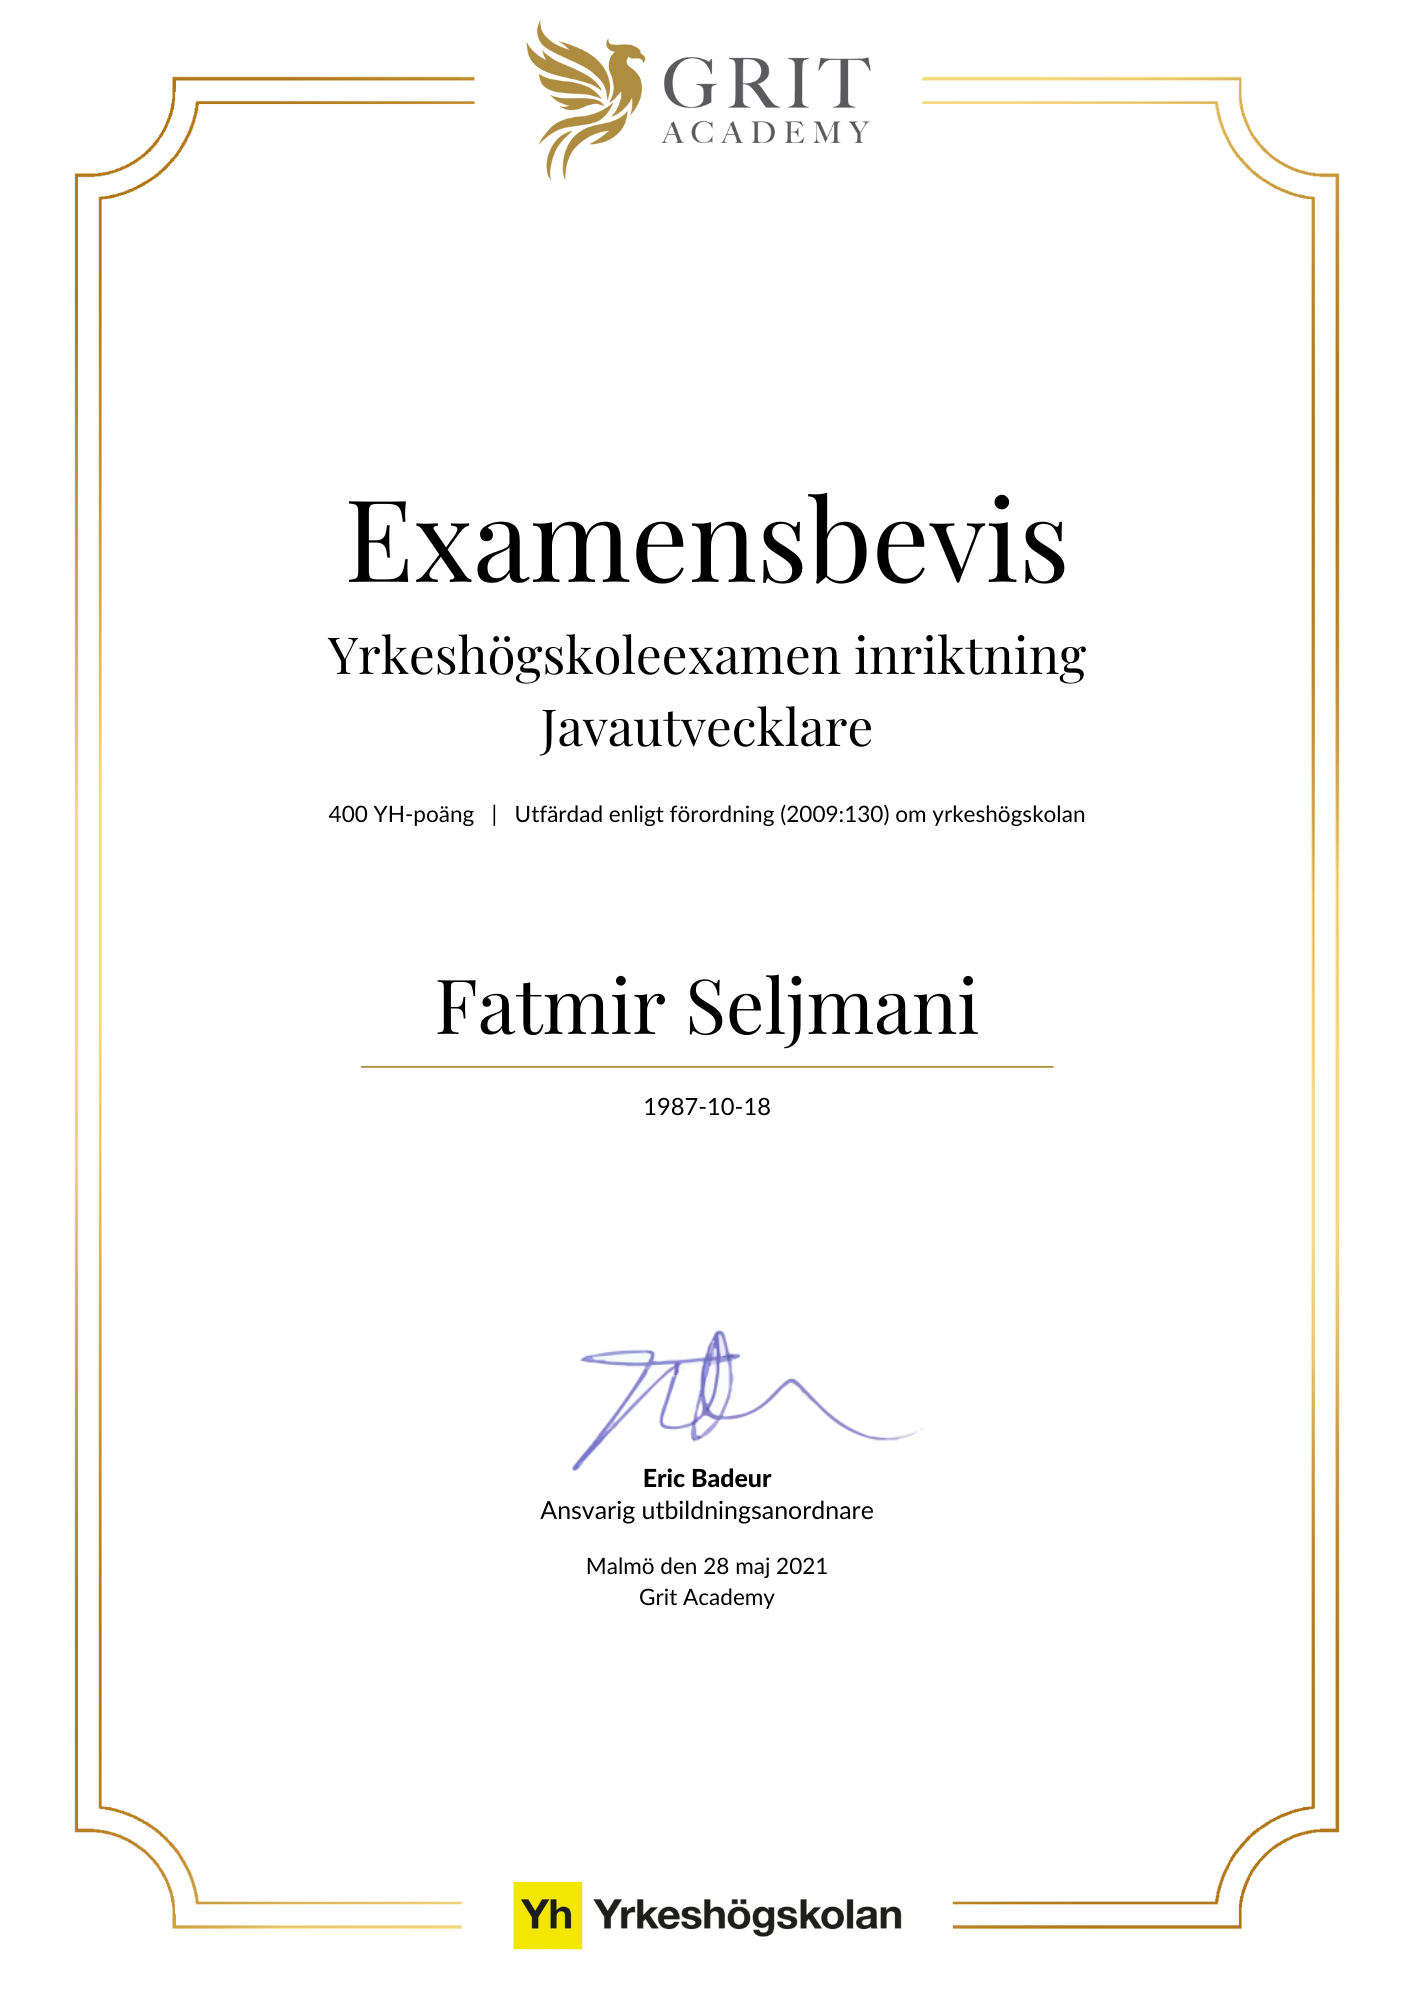 Examensbevis Fatmir Seljmani - 1